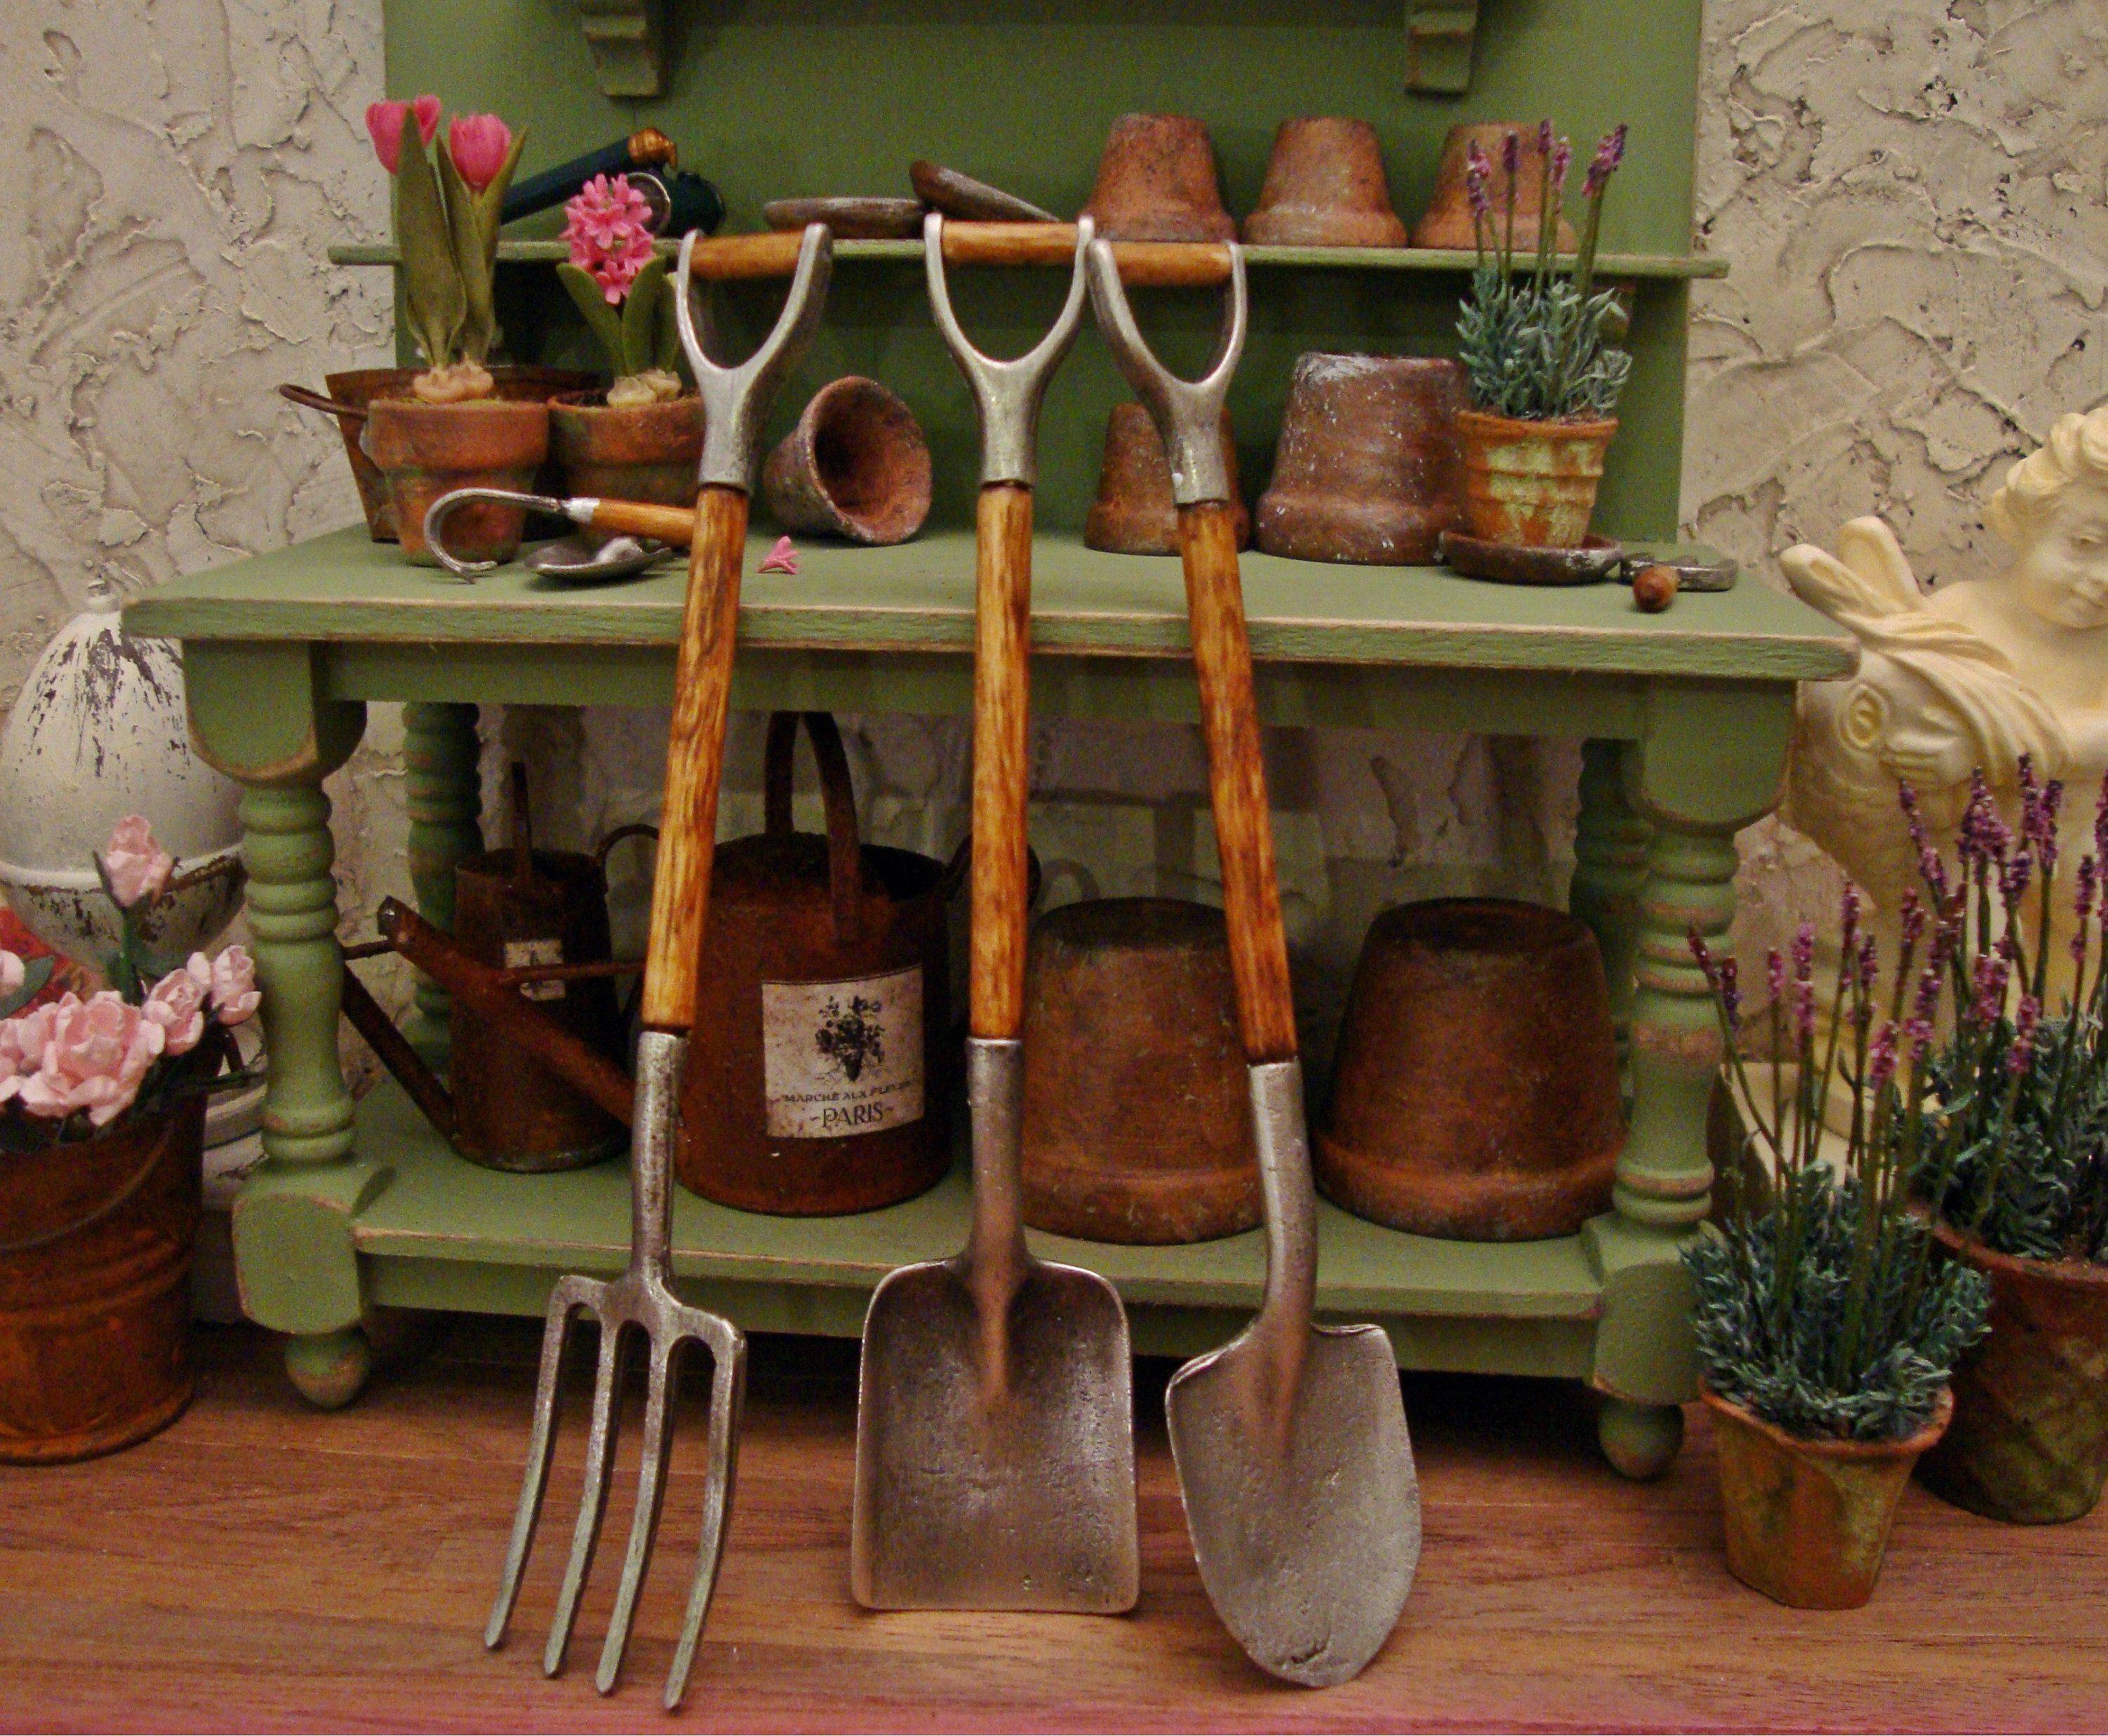 Antique Tools Creative Garden Wall Display